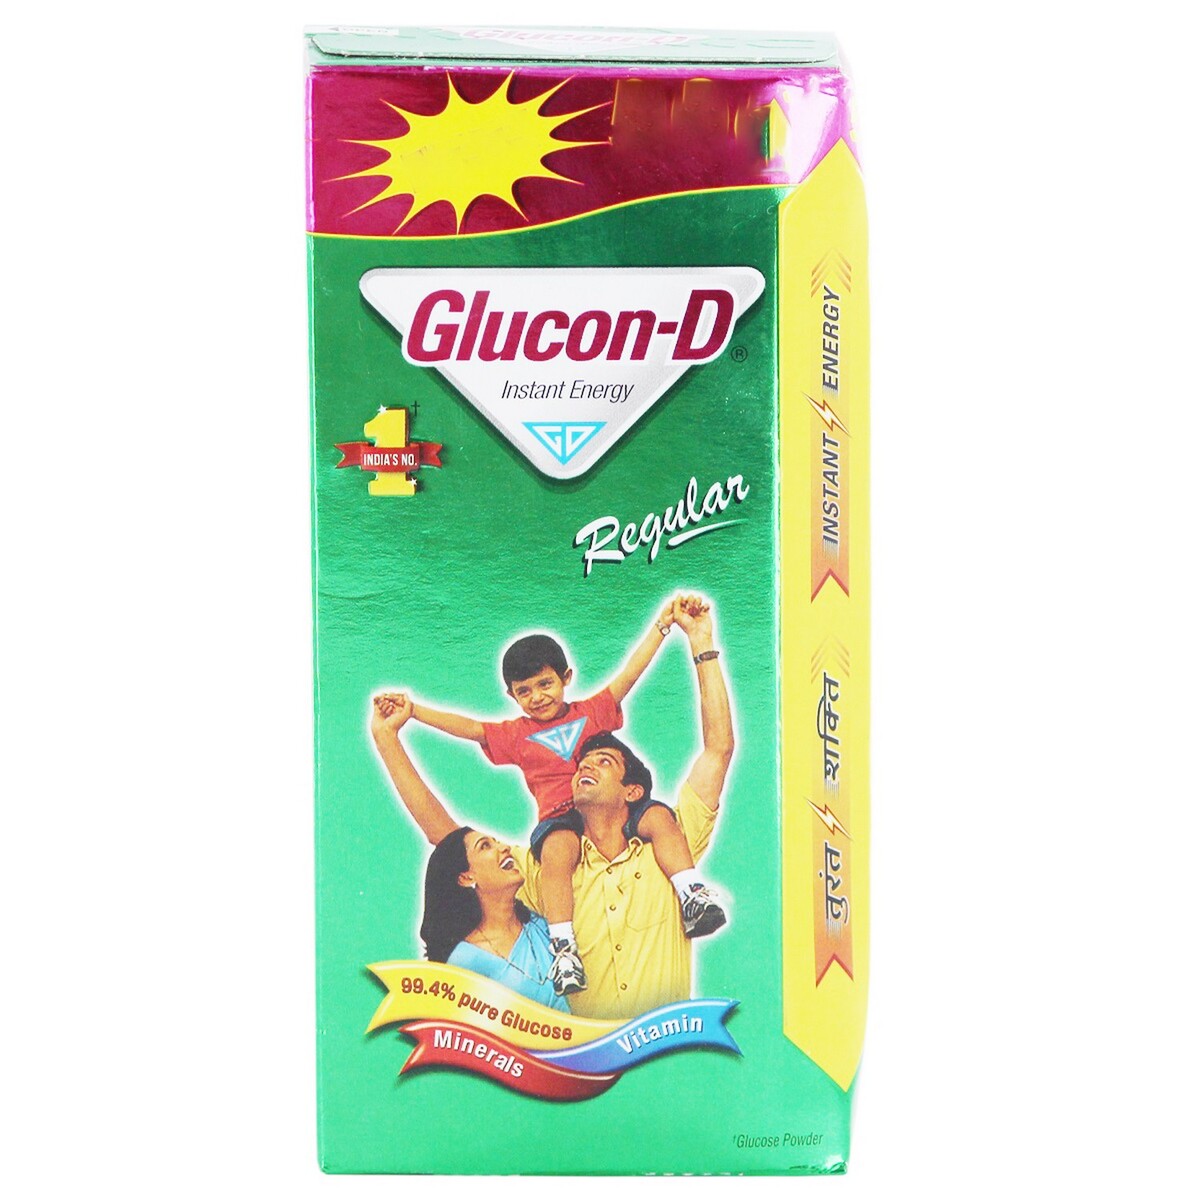 Glucon-D Energy Drink Regular 75g